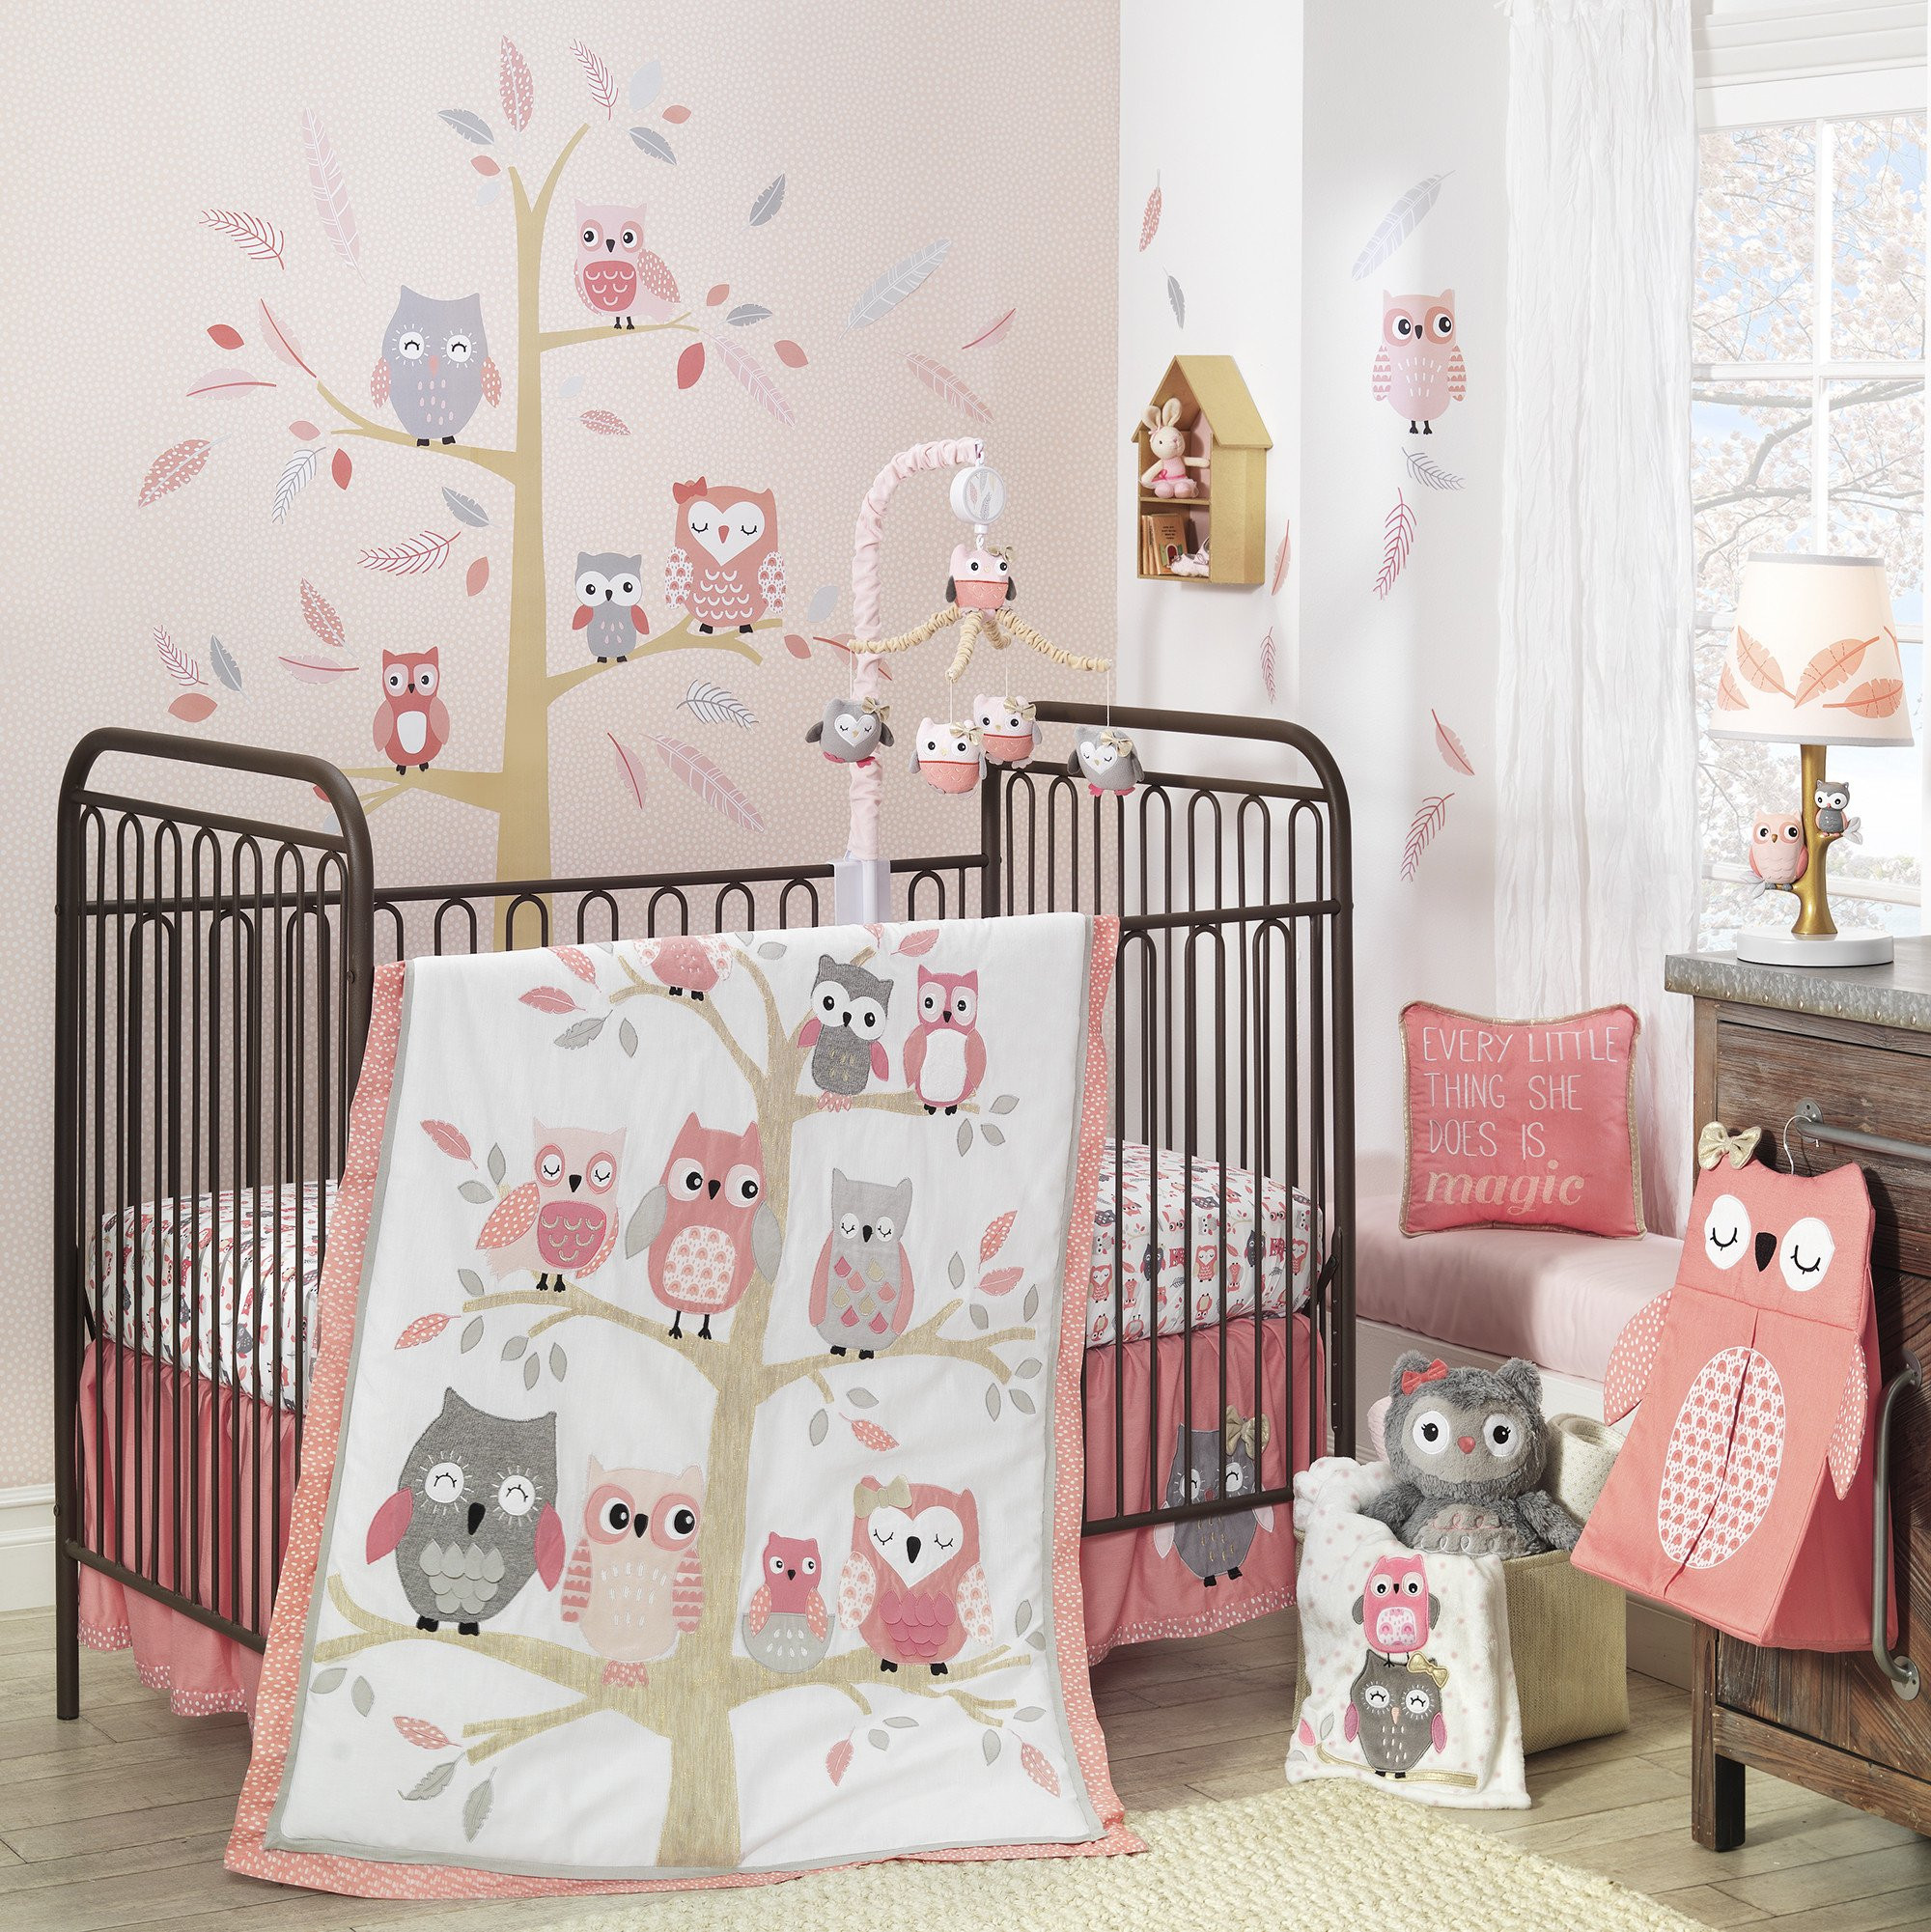 Owl Baby Decor
 Lambs & Ivy Family Tree Pink Gray Owl 6 Piece Nursery Baby